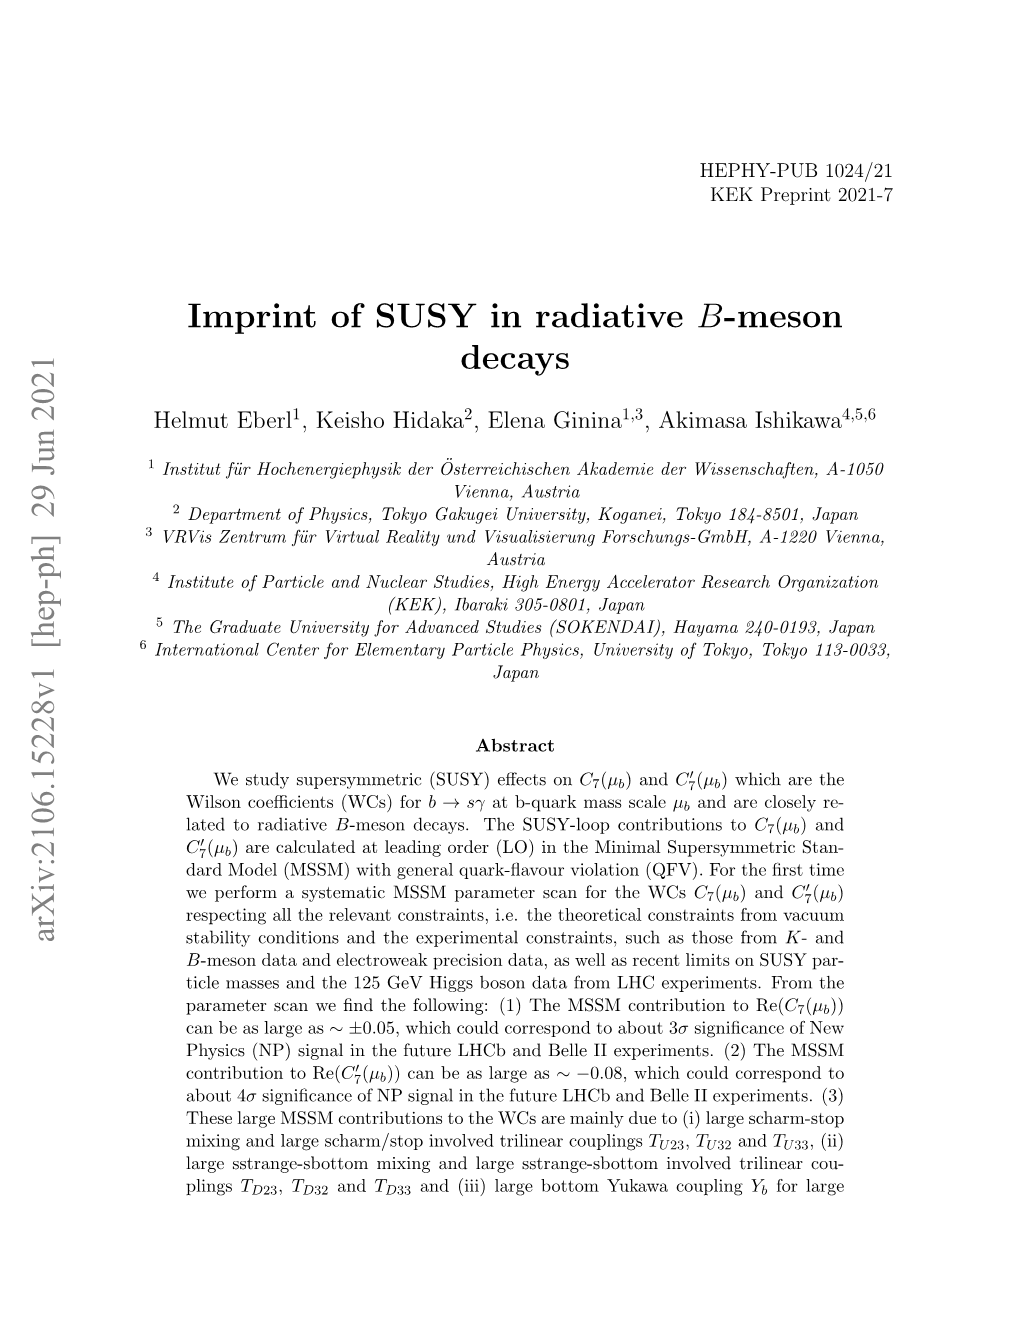 Imprint of SUSY in Radiative B-Meson Decays Arxiv:2106.15228V1